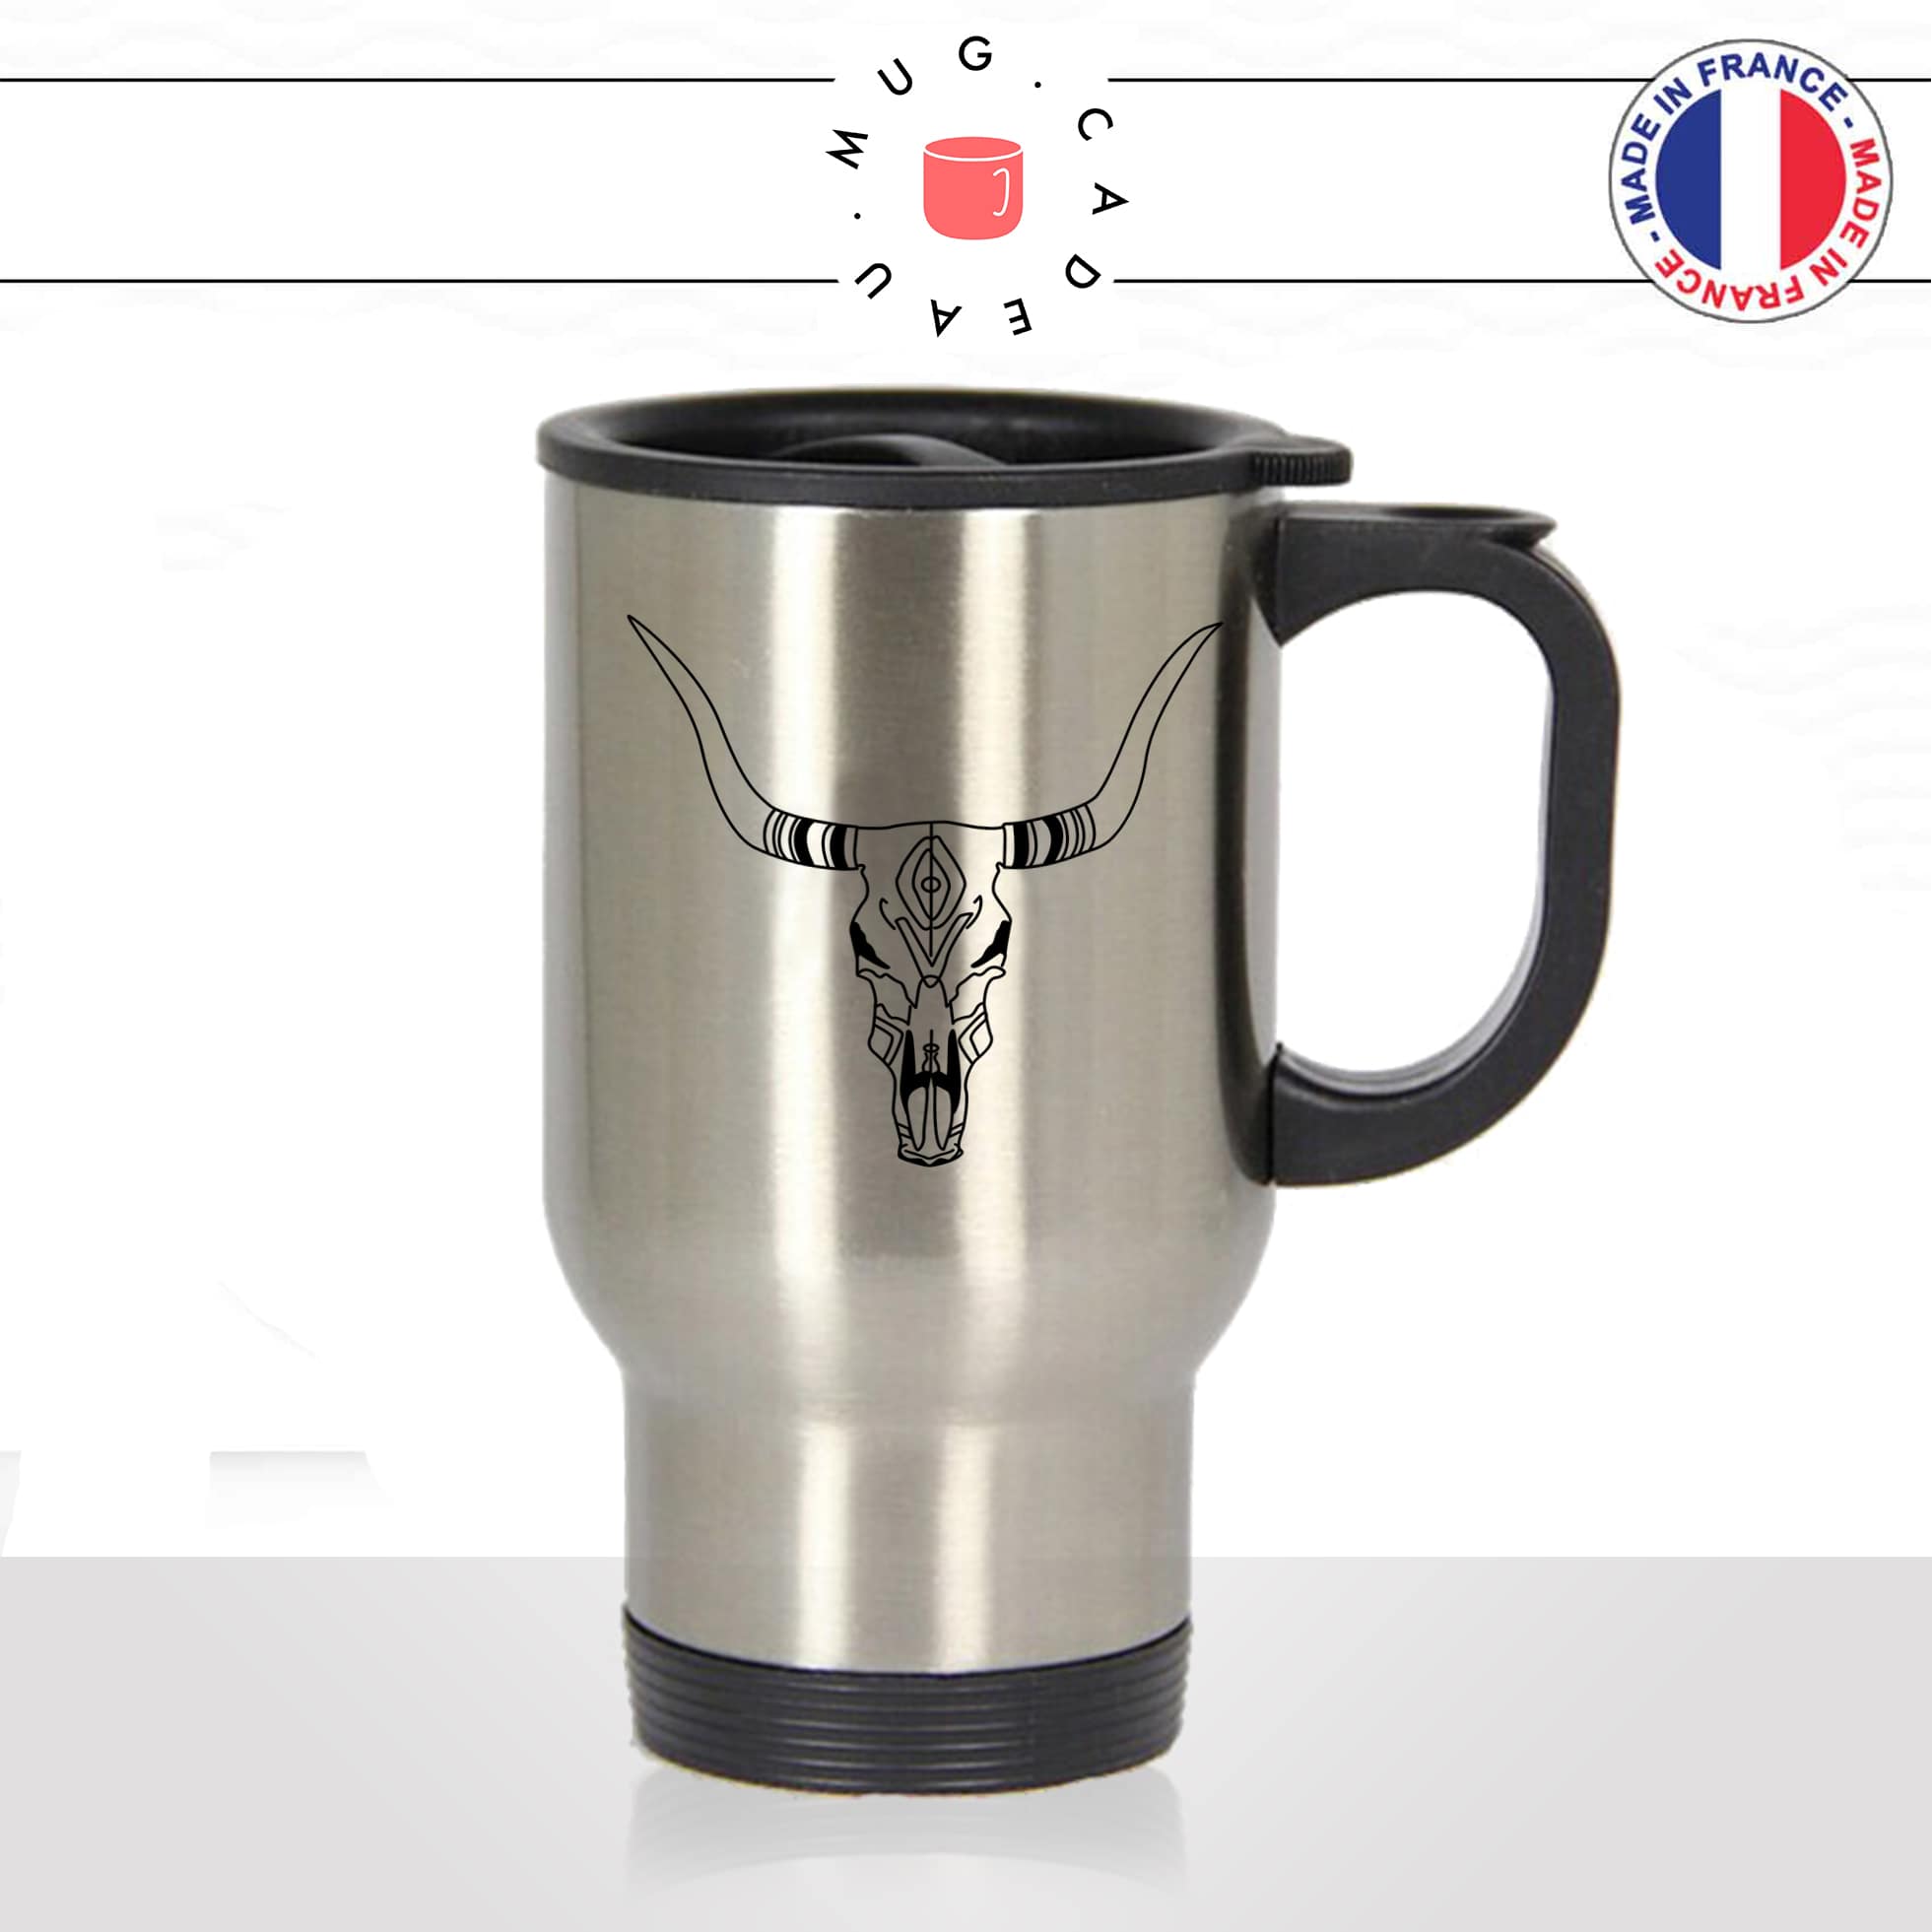 mug-tasse-thermos-de-voyage-café-thé-boisson-animal-animaux-buffle-buffalo-dessin-décoration-idée-cadeau-boho-chic-original-fun-cool2-min